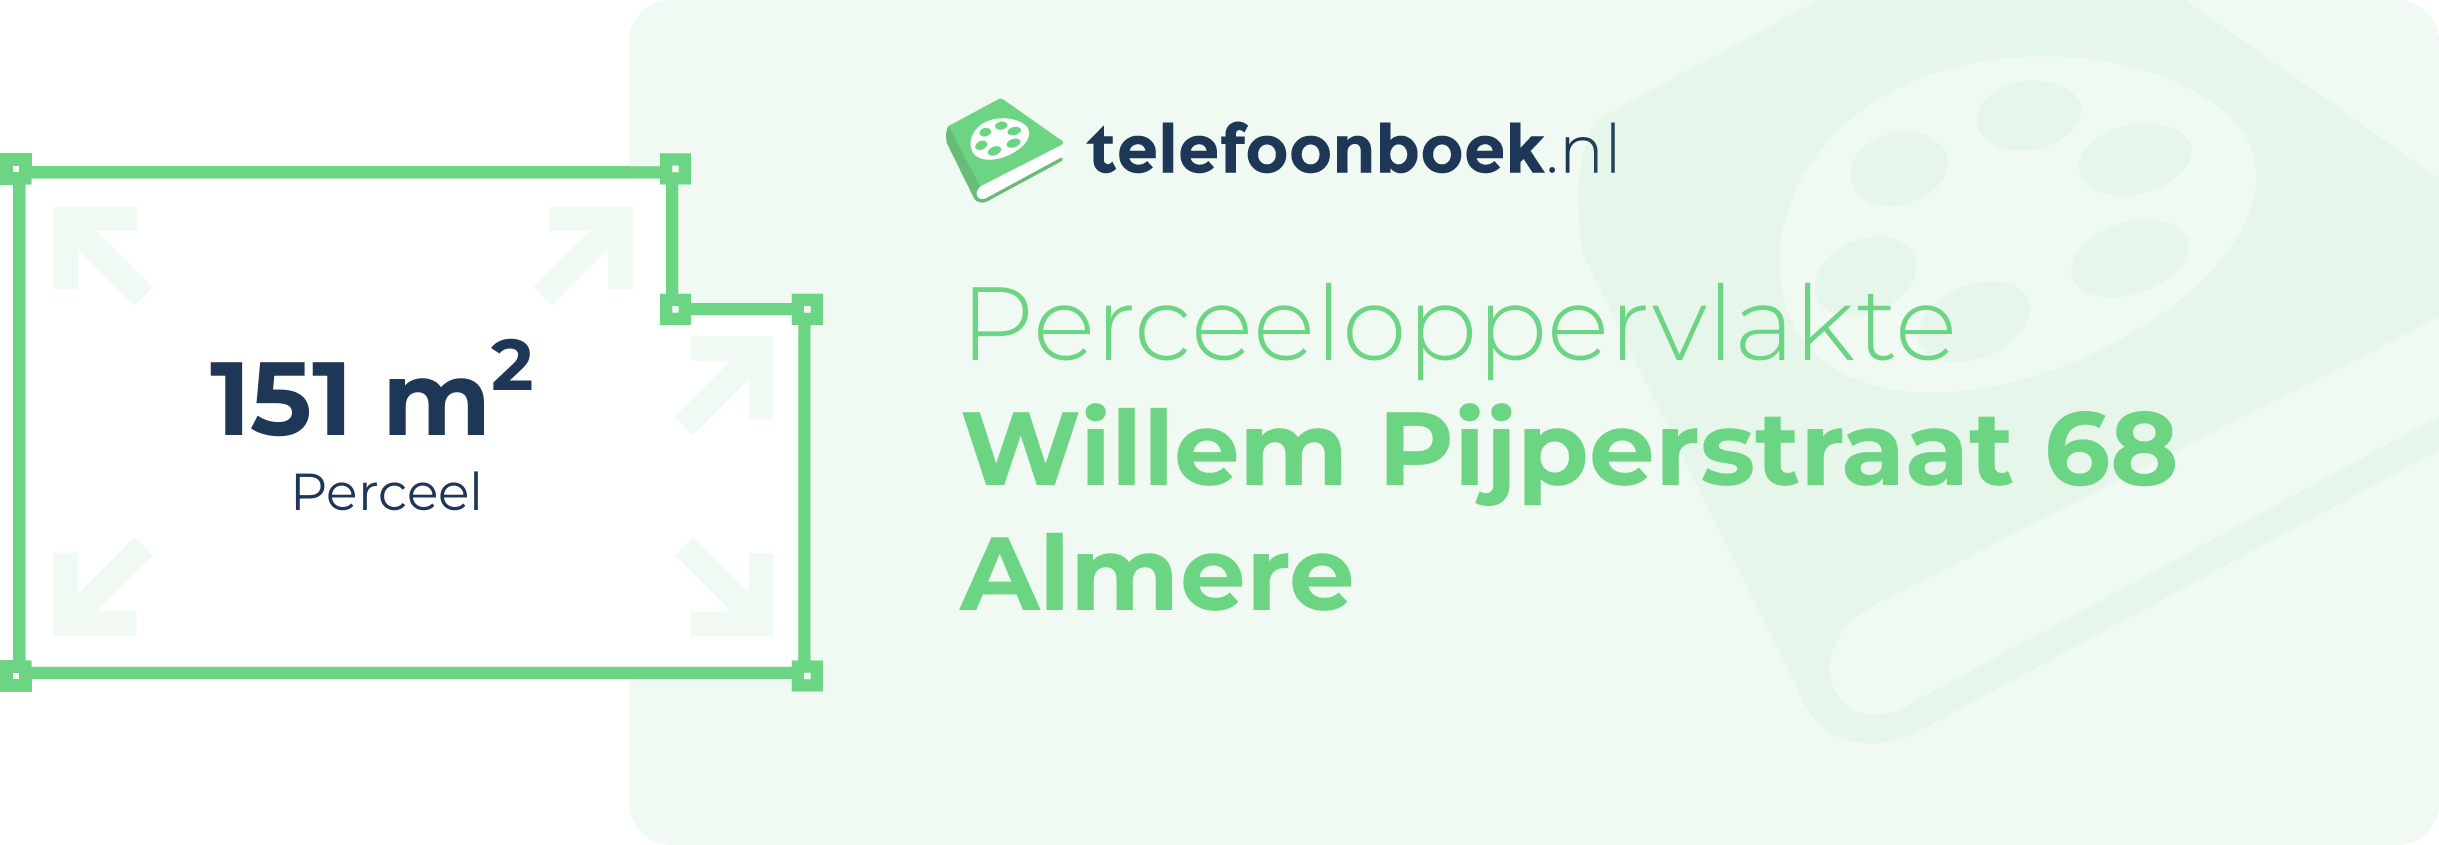 Perceeloppervlakte Willem Pijperstraat 68 Almere